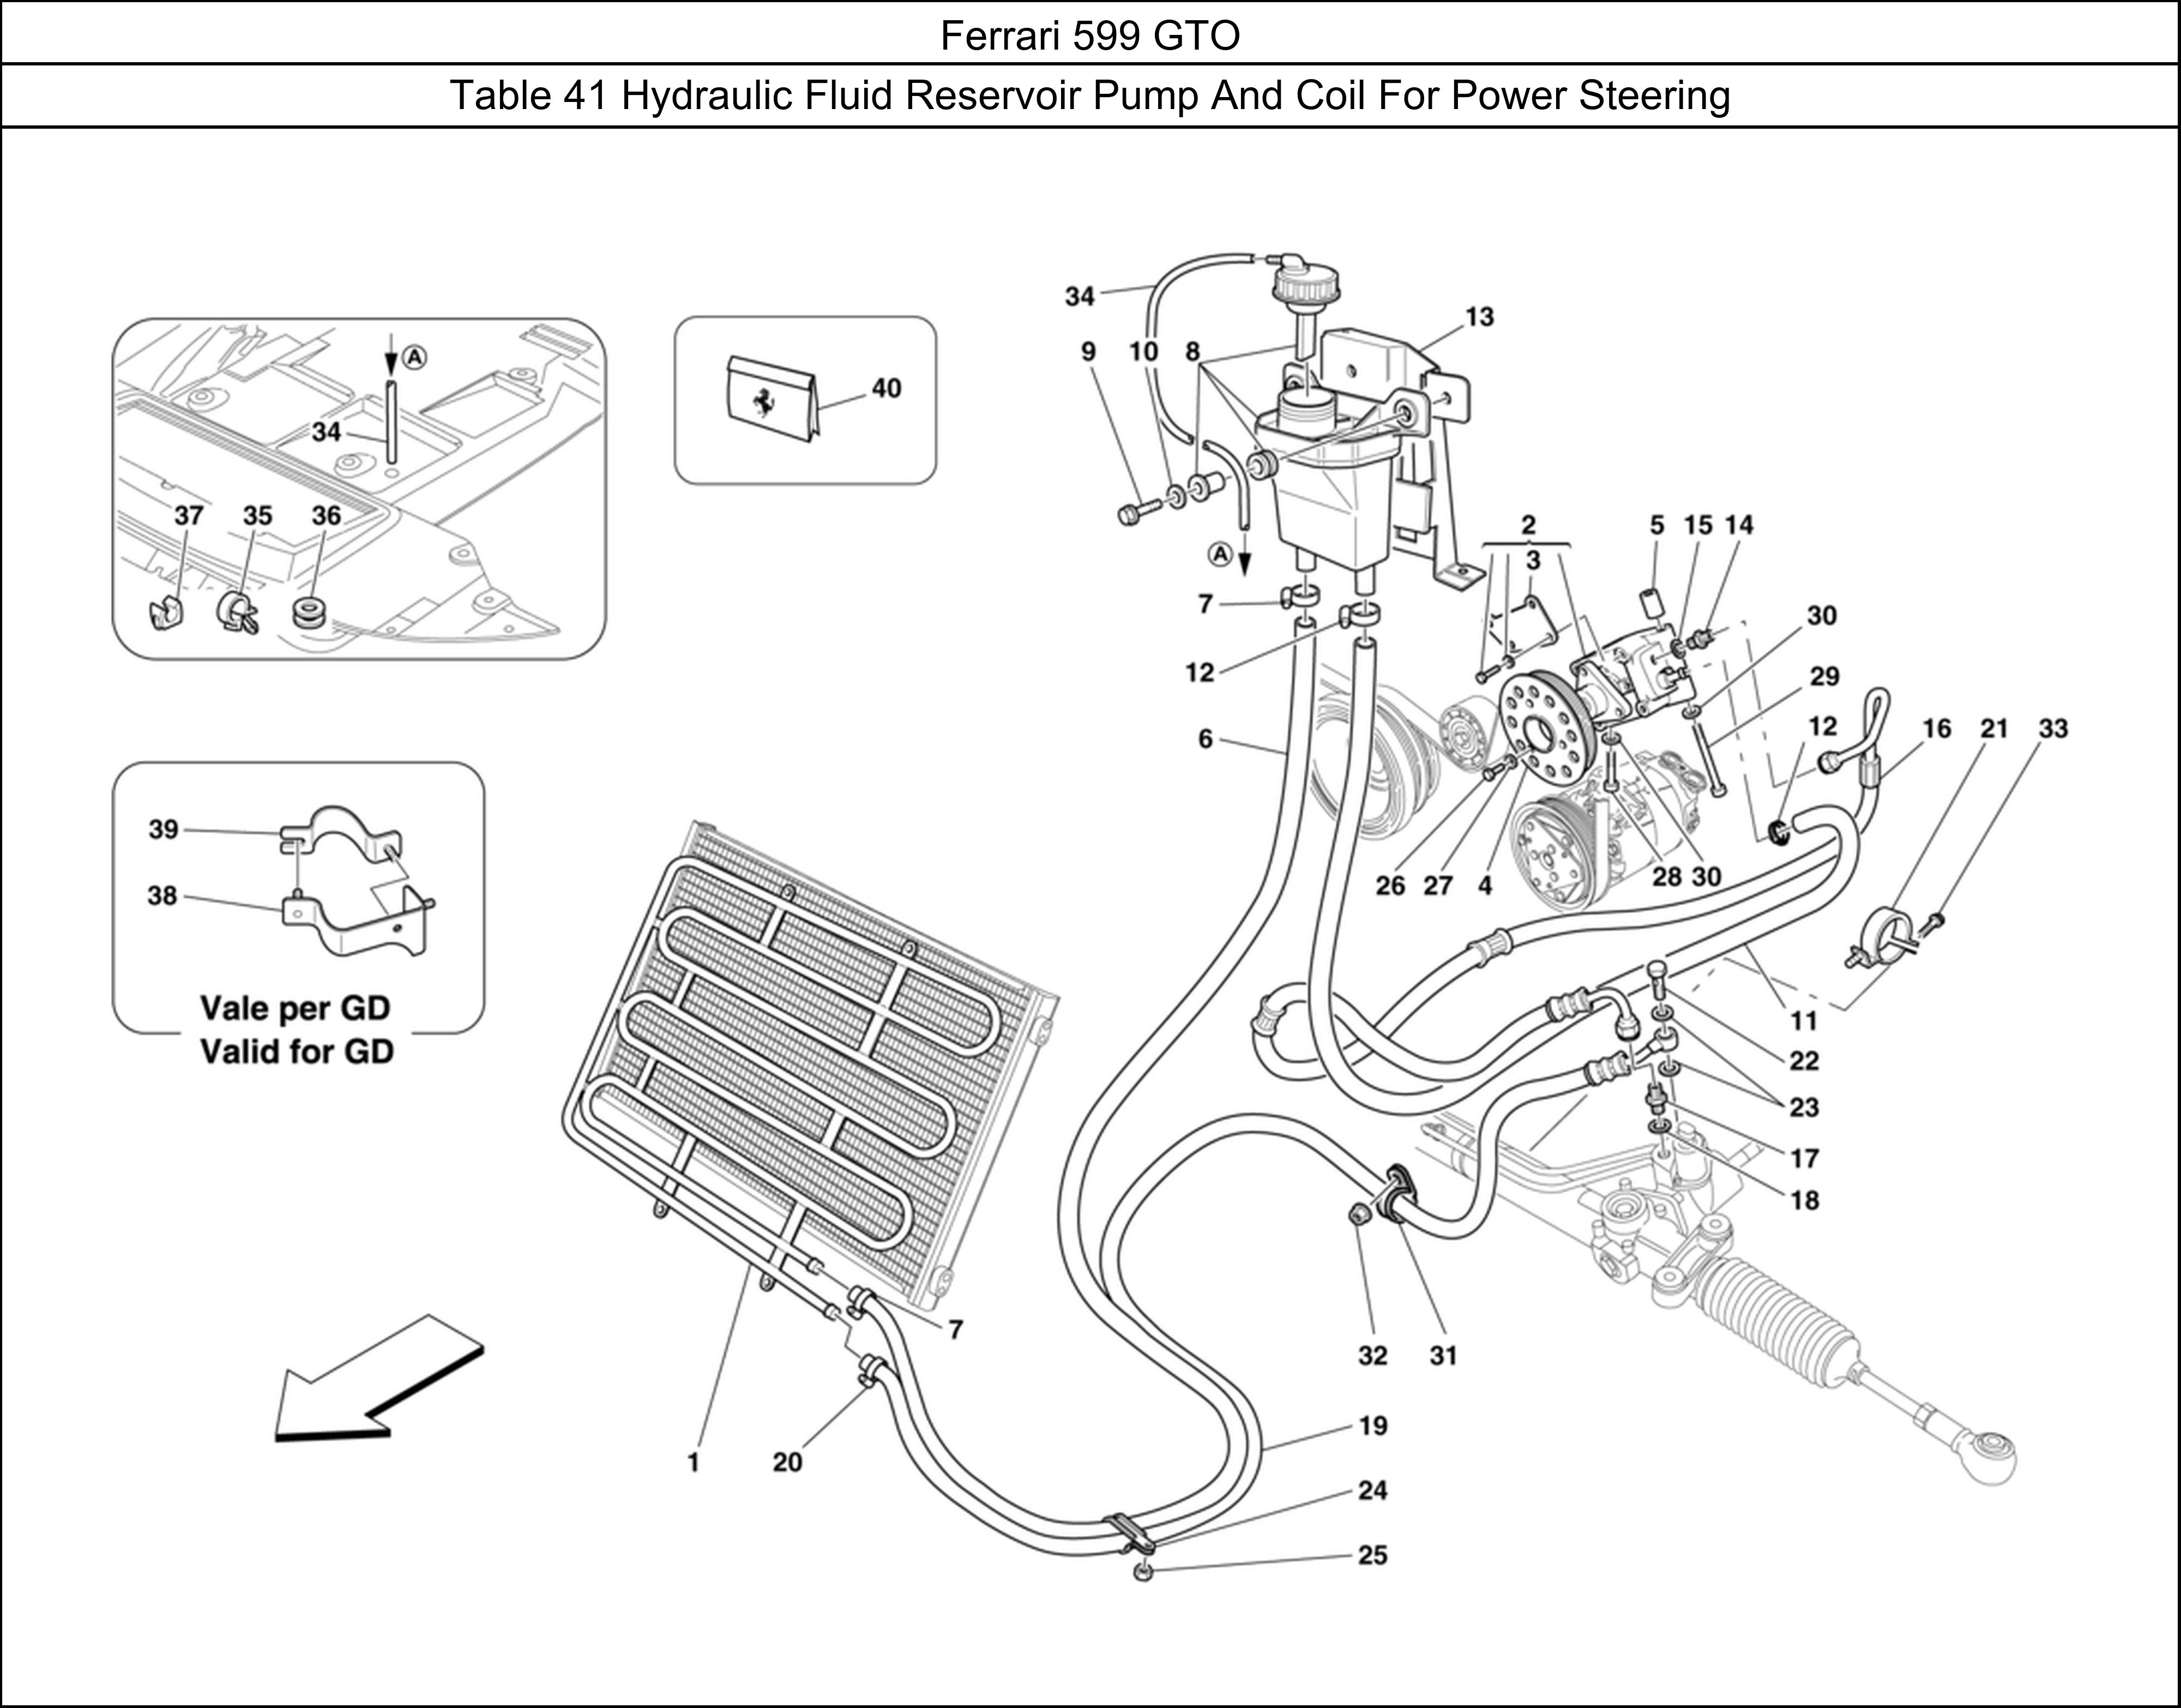 Ferrari Parts Ferrari 599 GTO Table 41 Hydraulic Fluid Reservoir Pump And Coil For Power Steering